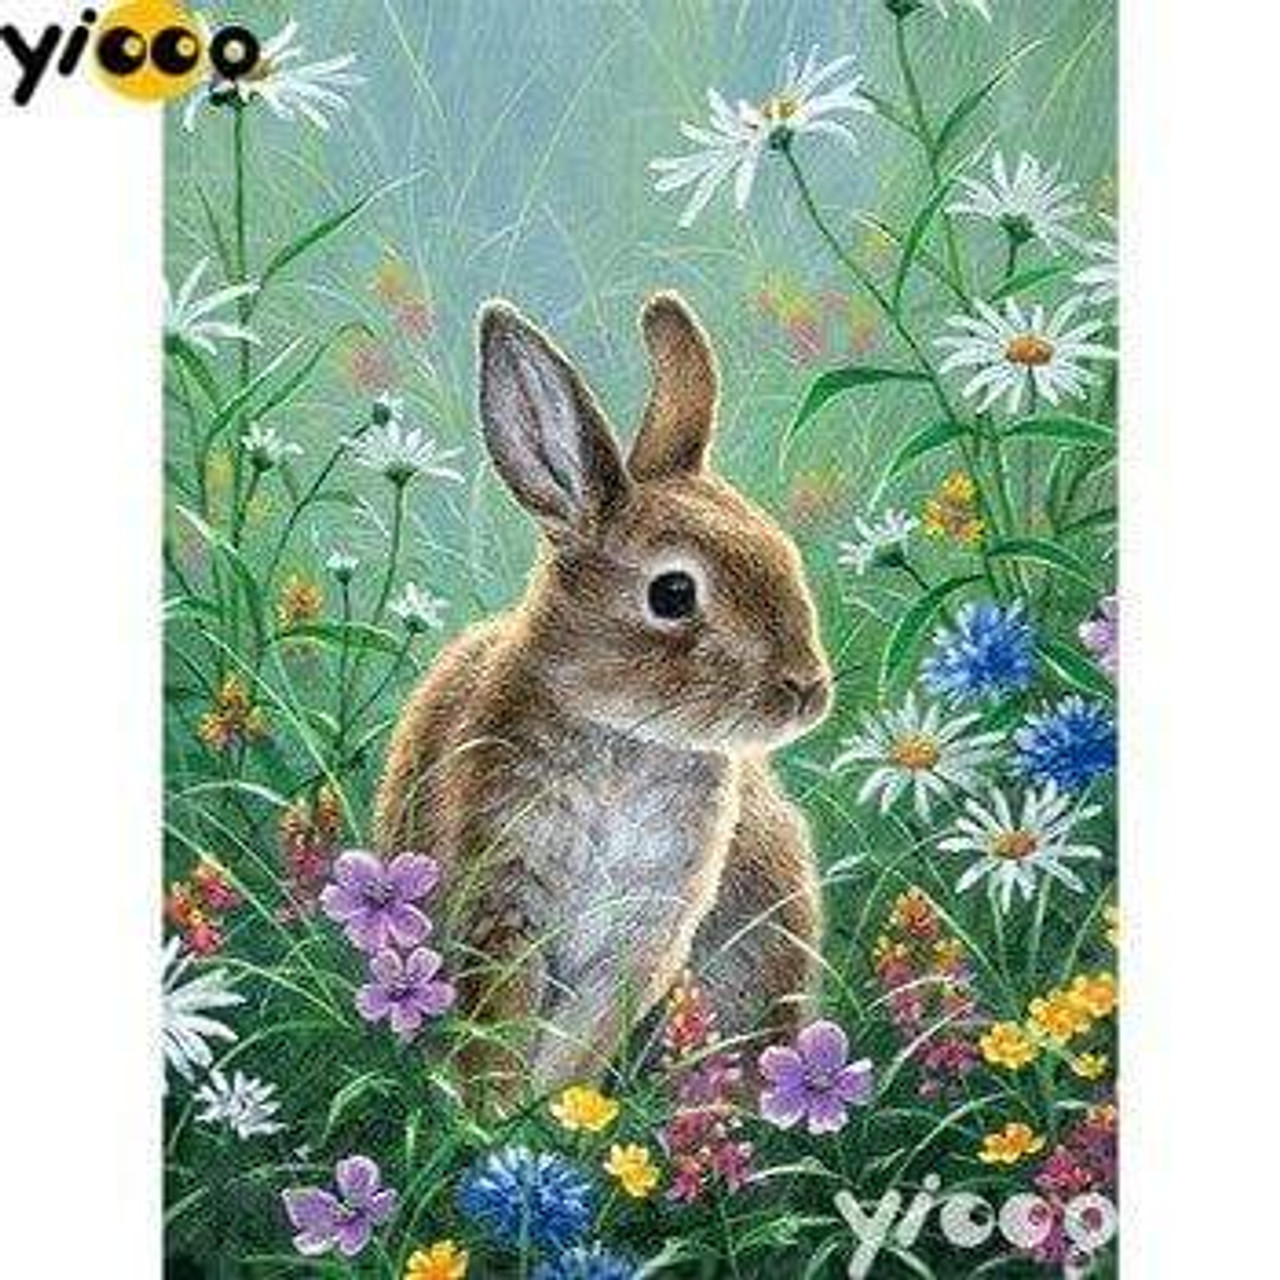 5D Diamond Painting Rabbit in the Wild Flowers Kit